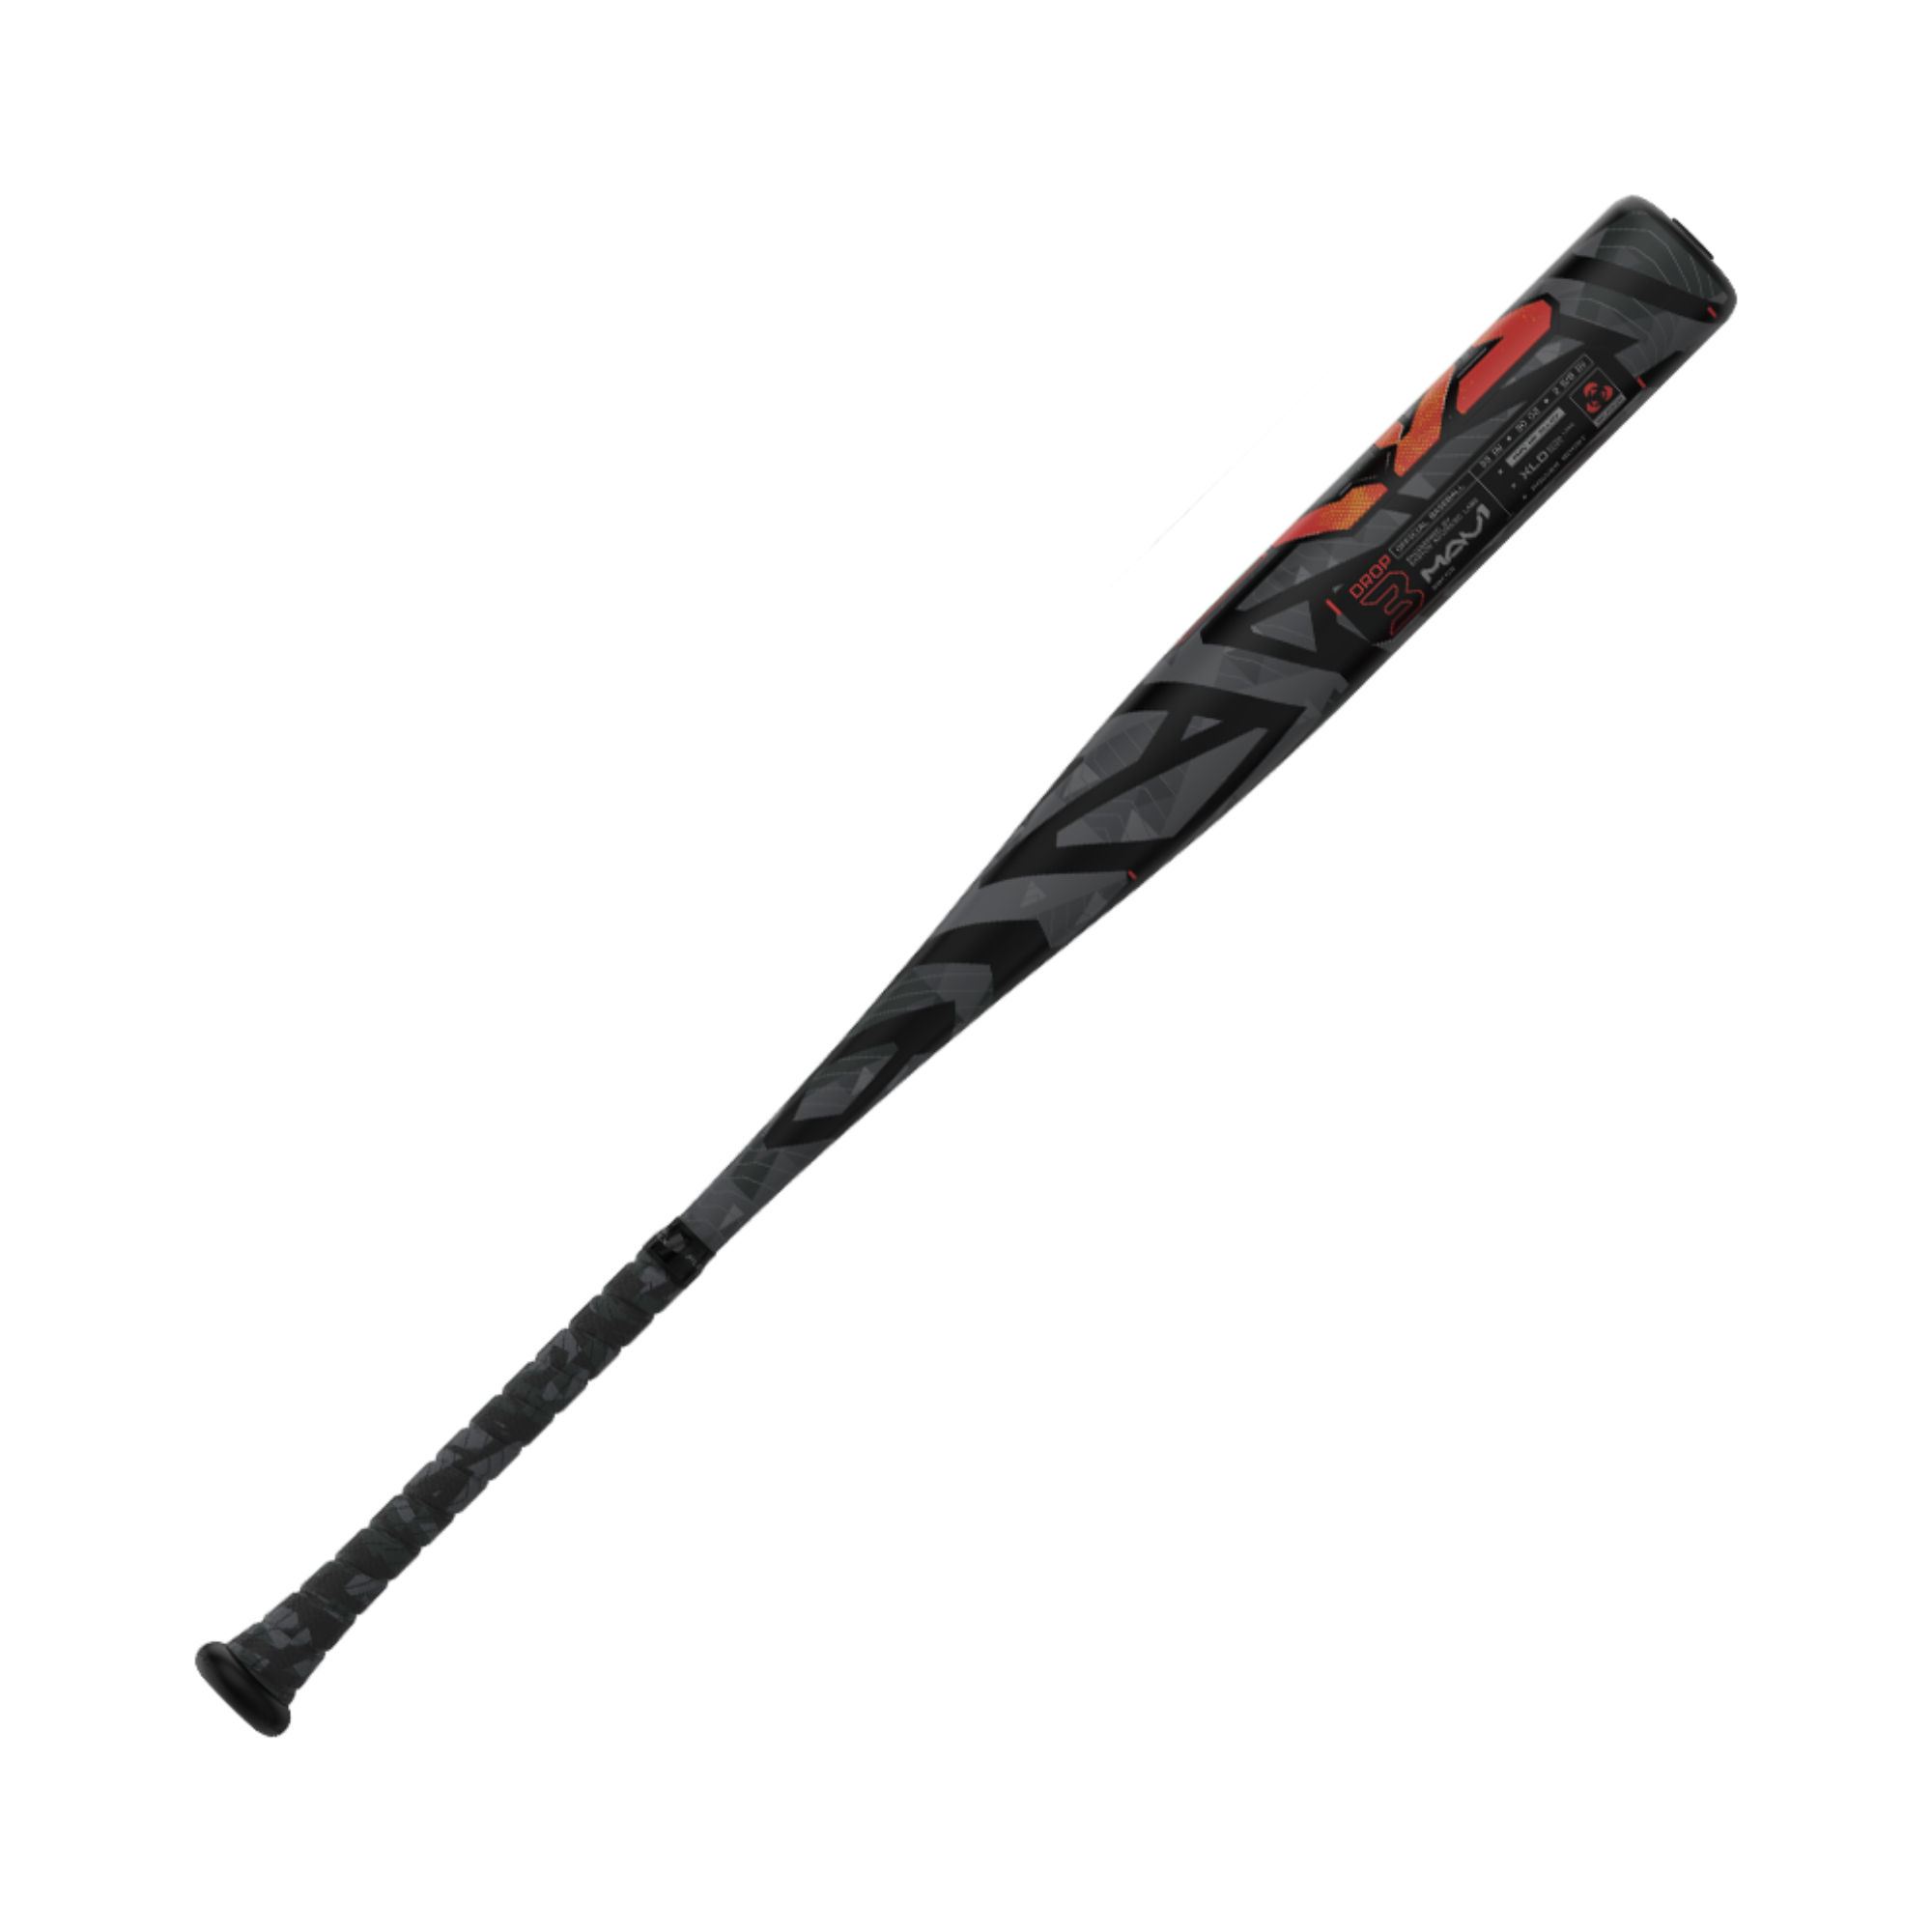 Easton MAV1 - 3 (2 5/8" Barrel) BBCOR Baseball Bat